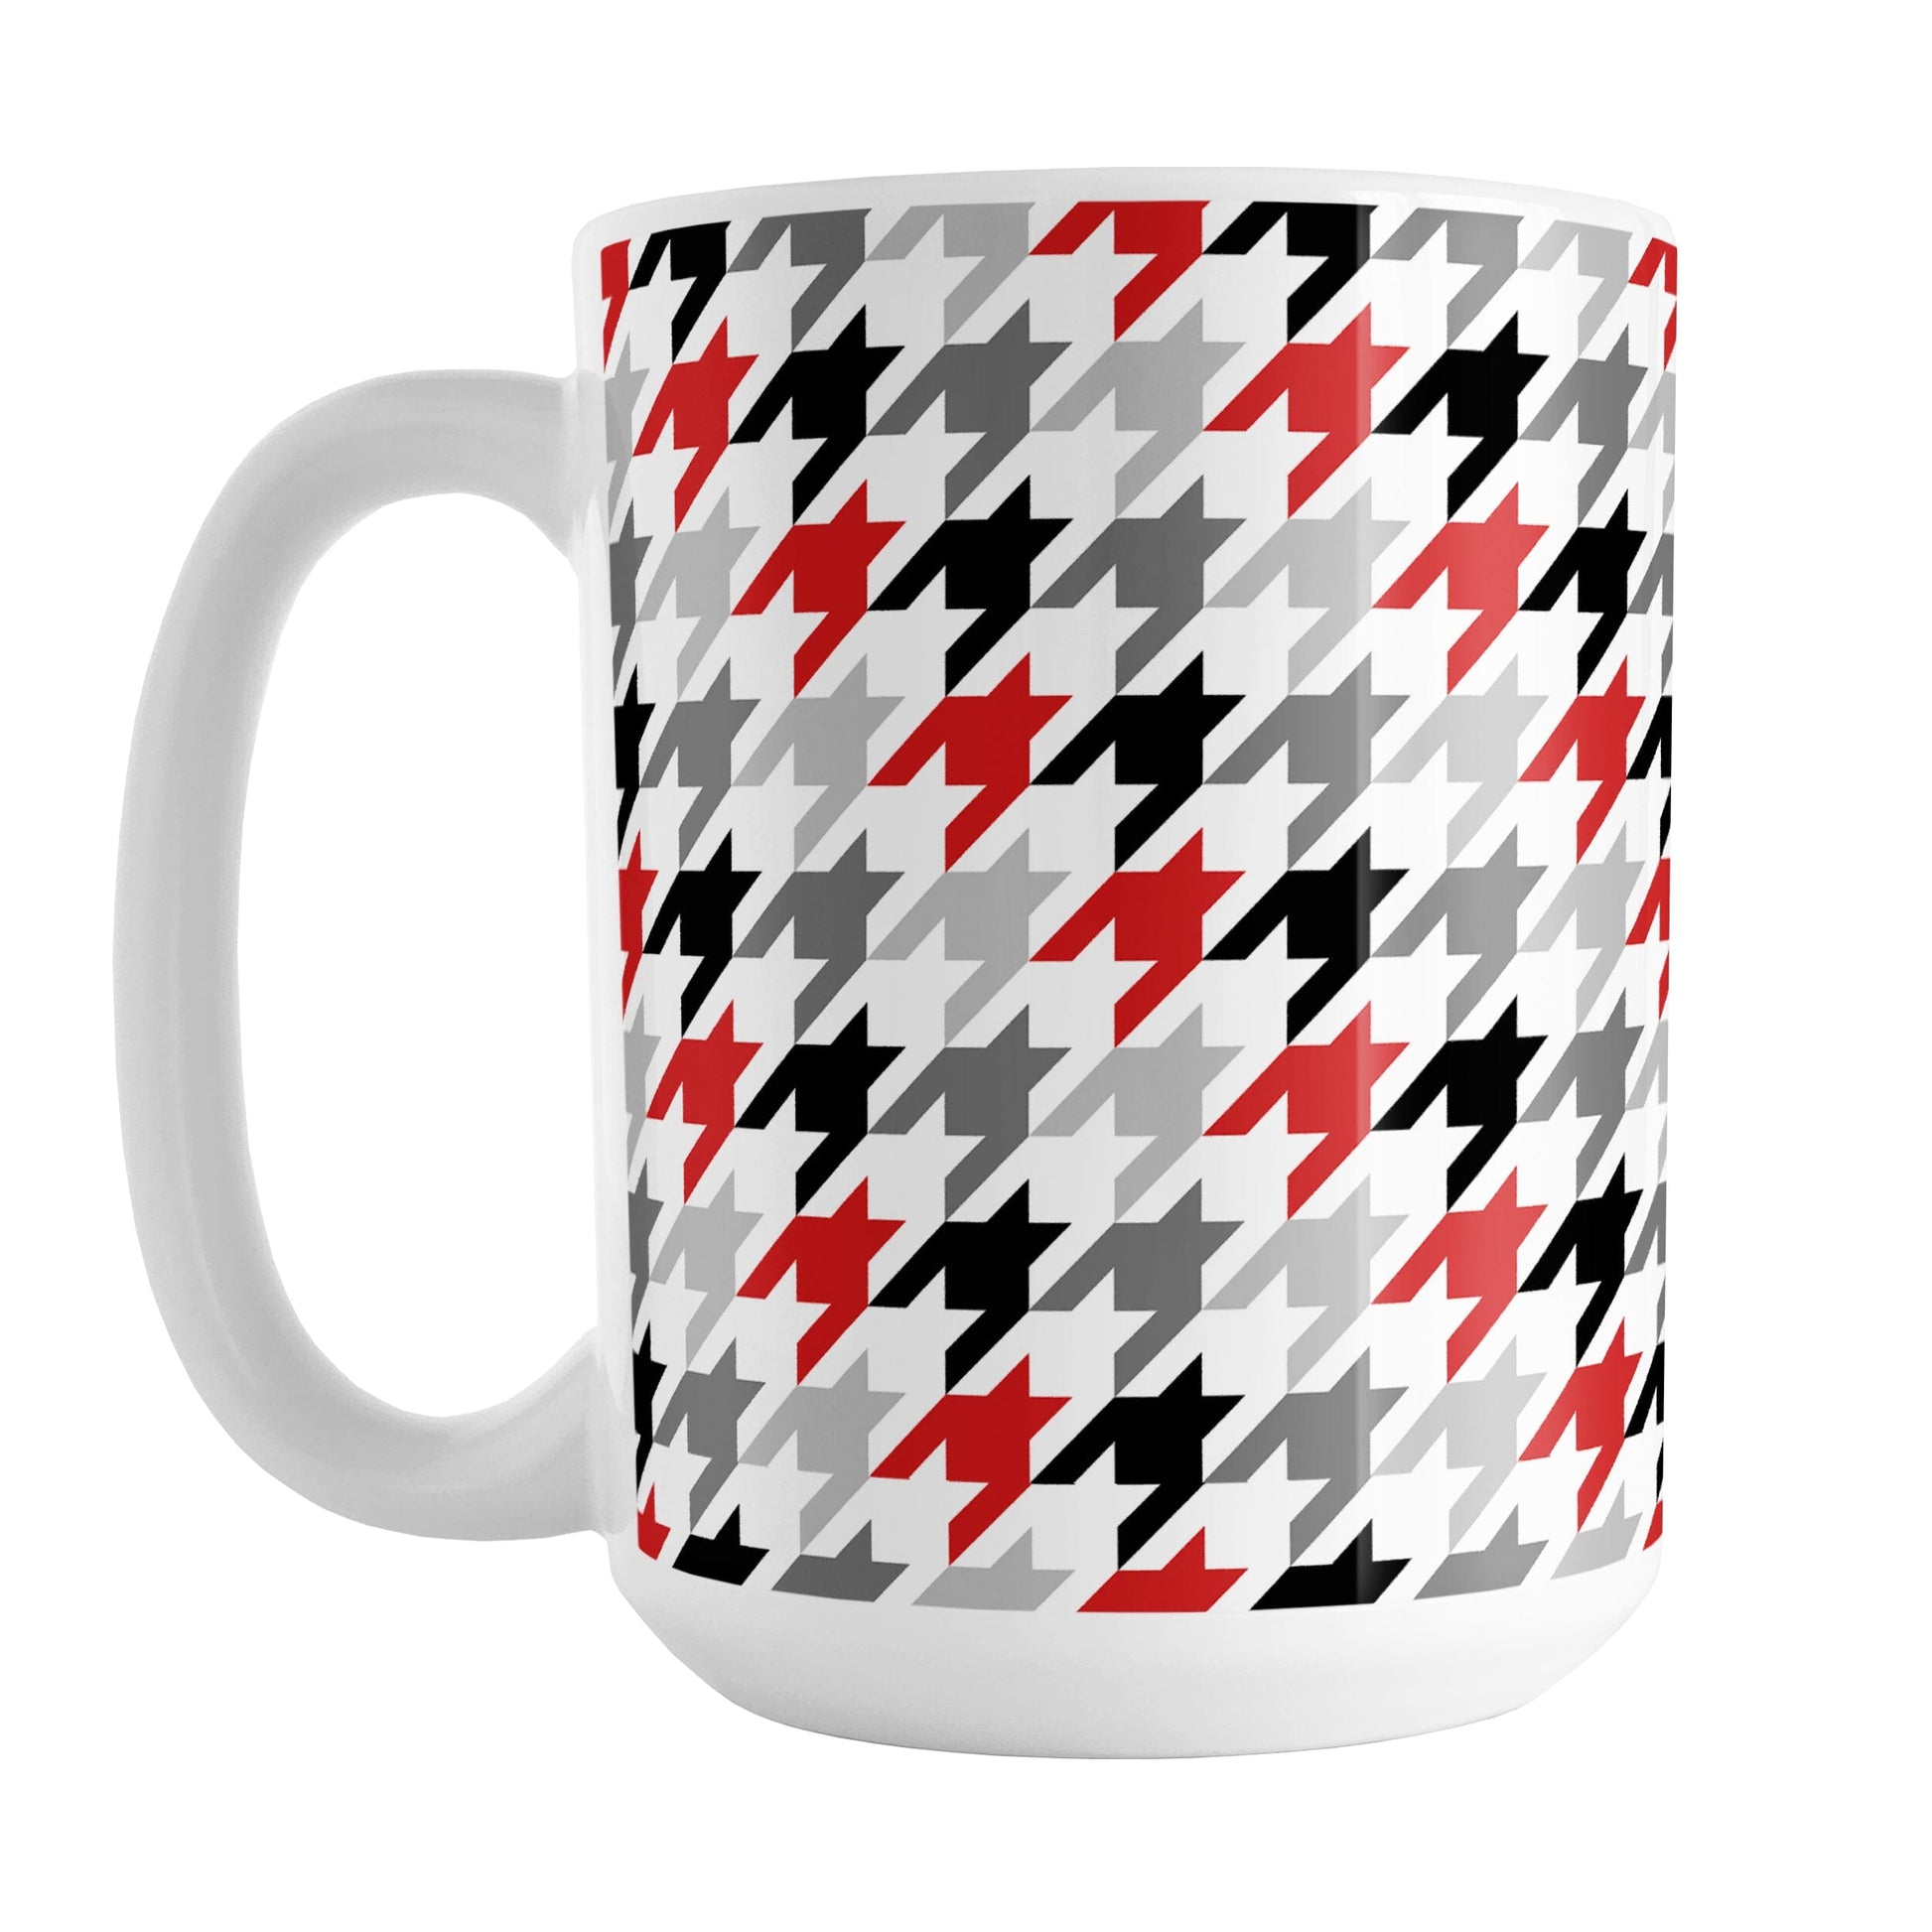 Black Gray Red Houndstooth Mug (15oz) at Amy's Coffee Mugs. A ceramic coffee mug designed with a houndstooth or dogtooth pattern in a black, gray, and red color progression that wraps around the mug to the handle.